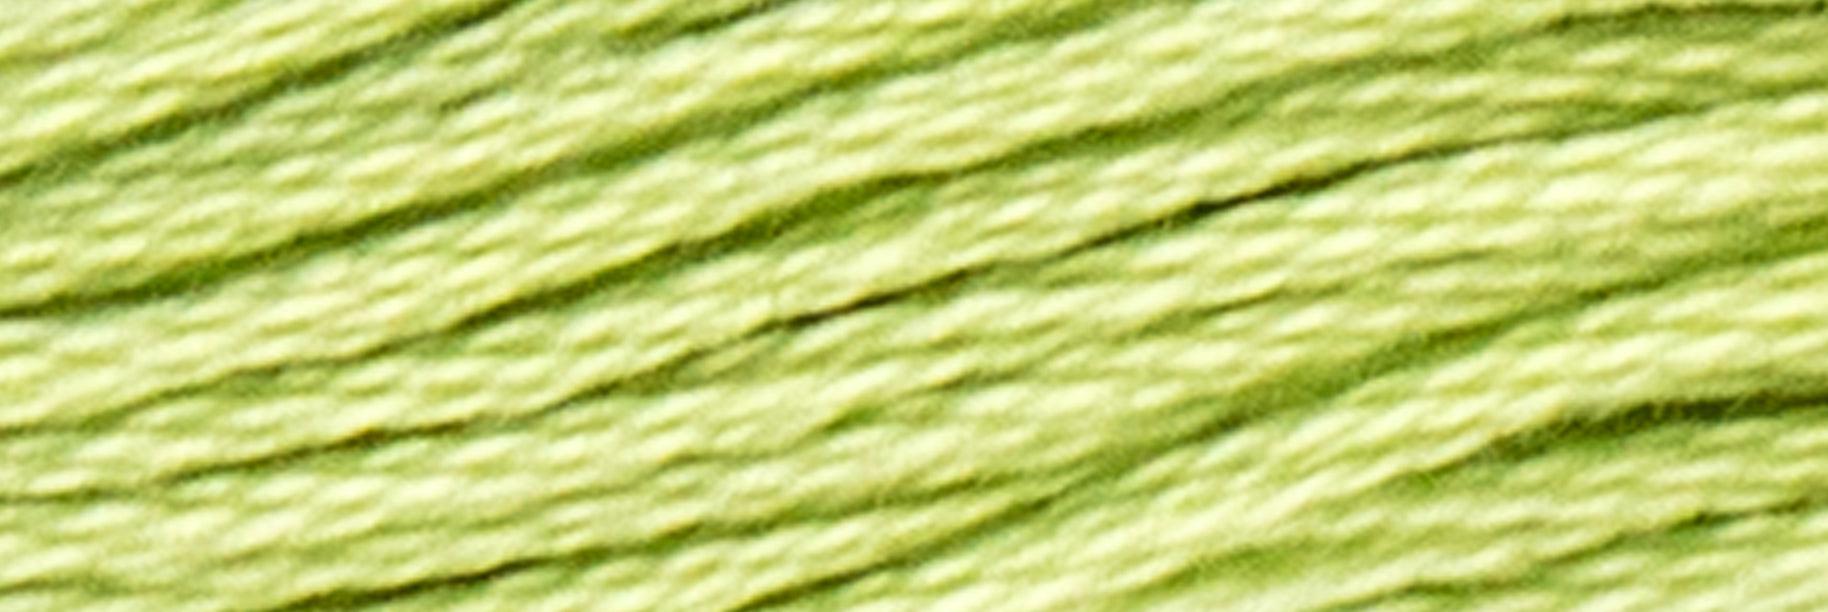 Stranded Cotton Luca-S - 260 / DMC X / Anchor 260 - Luca-S Stranded Cotton